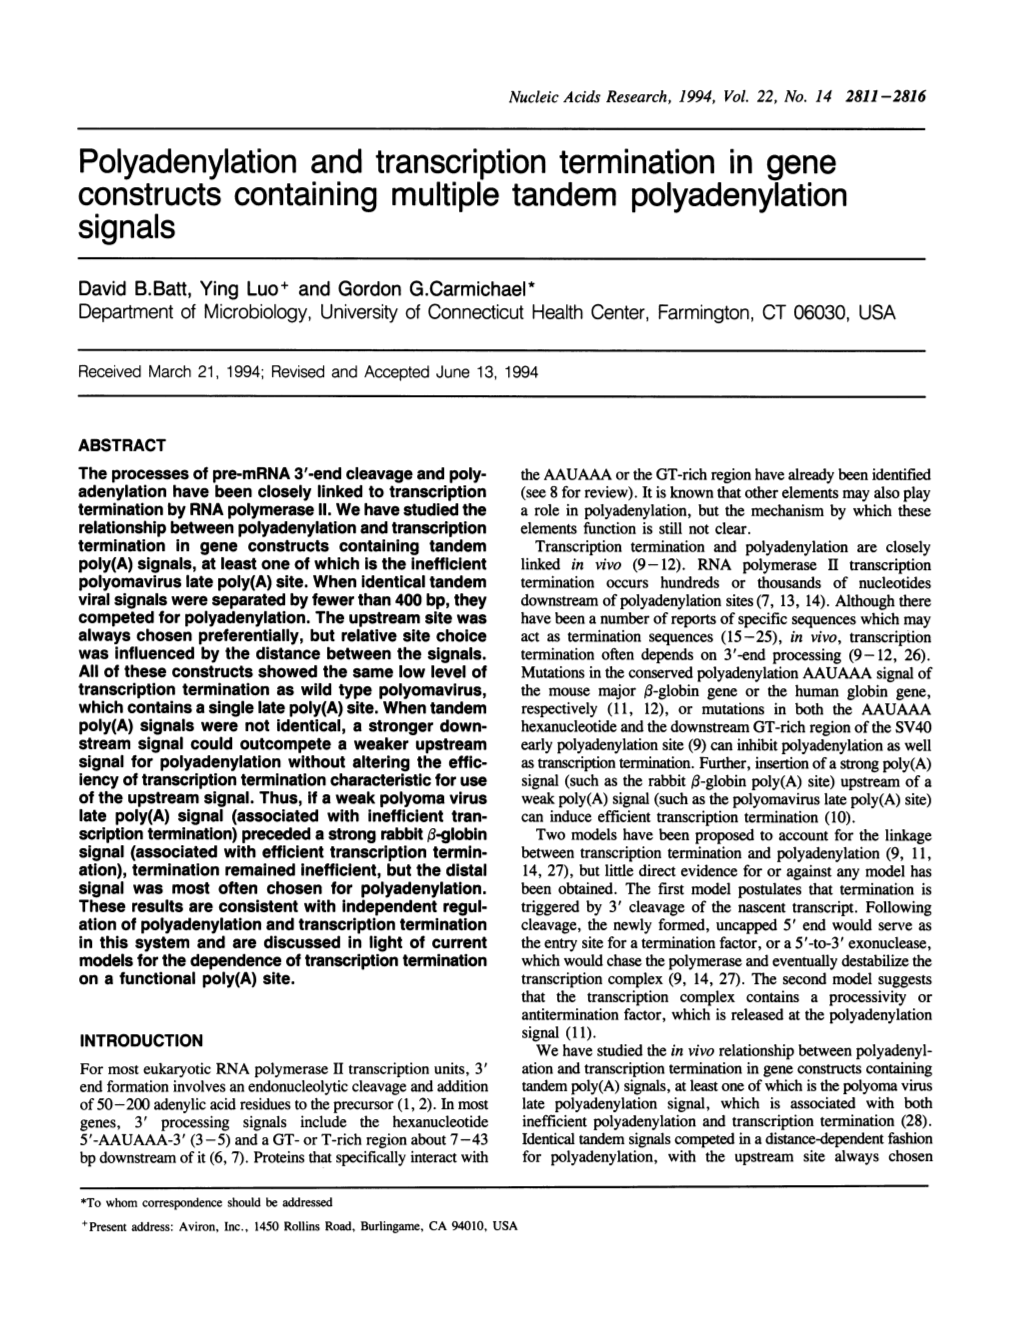 Polyadenylation and Transcription Termination in Gene Constructs Containing Multiple Tandem Polyadenylation Signals